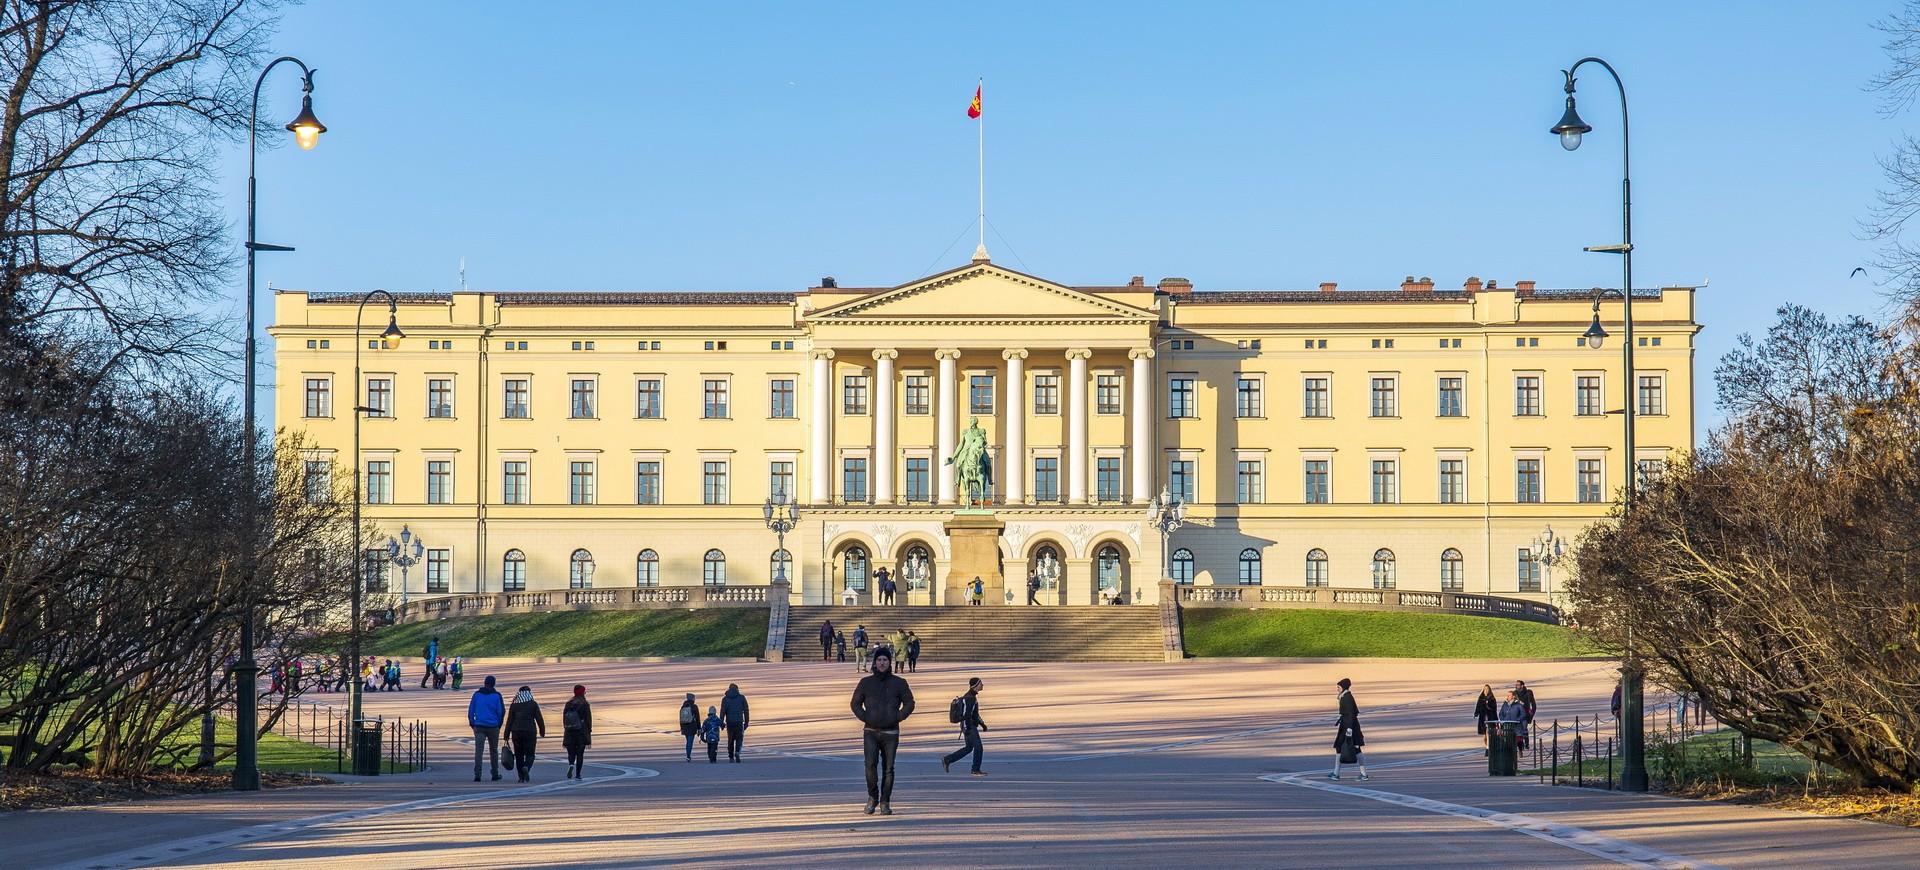 Palais Royal Kongelige Slott à Oslo